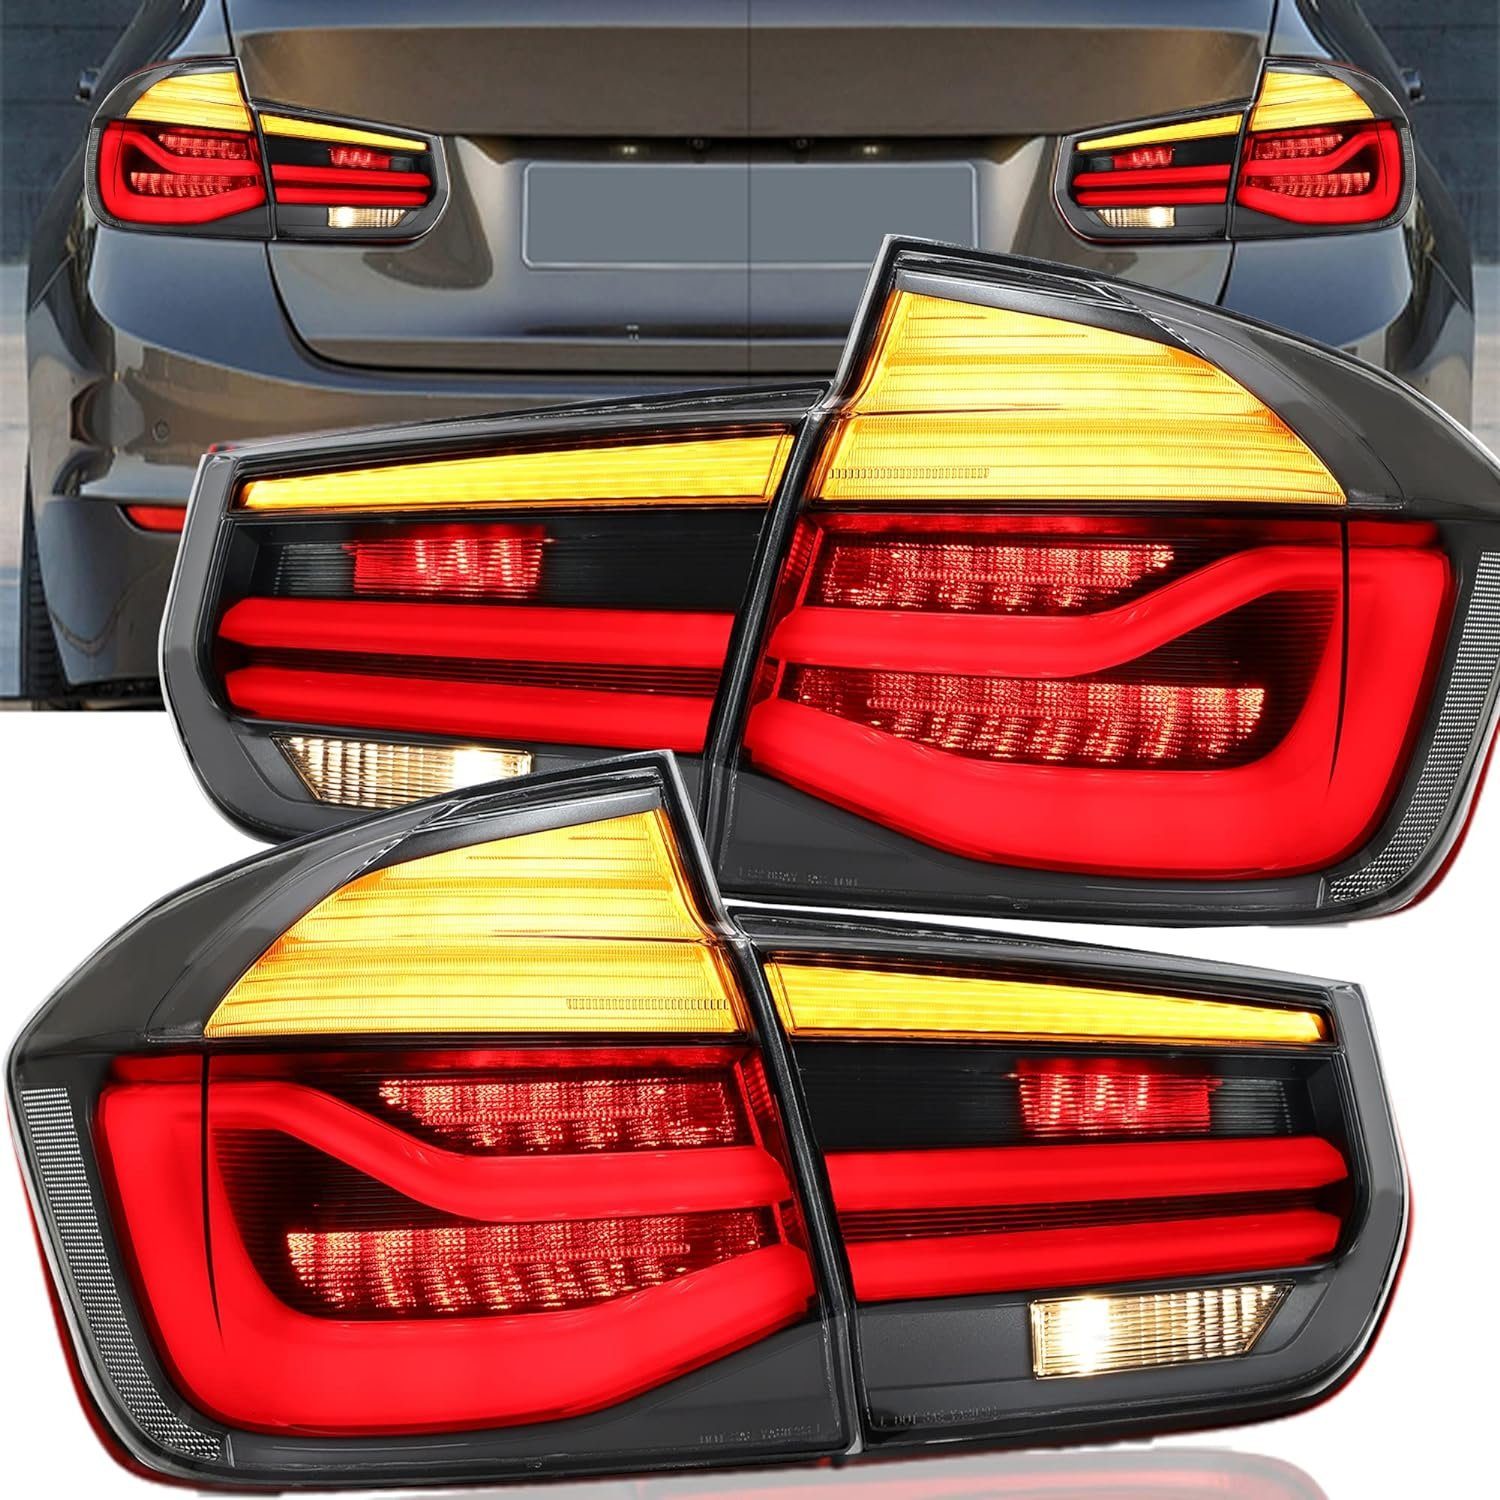 LLCTOOLS Rückleuchte Voll LED Rückleuchten für BMW 3er F30 F35 F80 2011 - 2019, LED fest integriert smoke mit weissen Blinkern